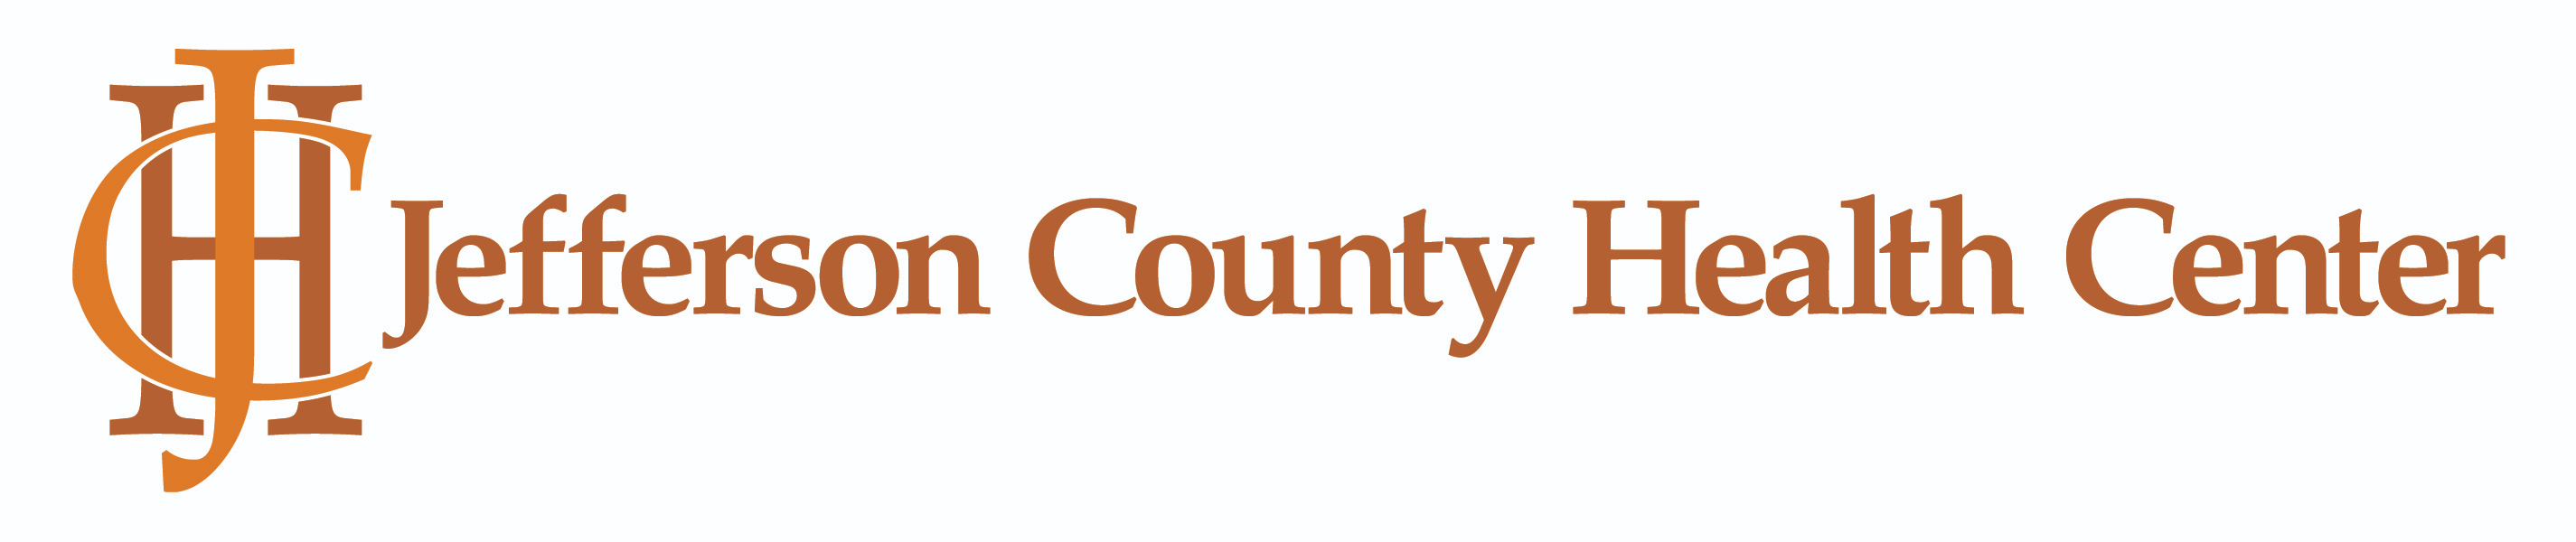 Jefferson County Health Center logo